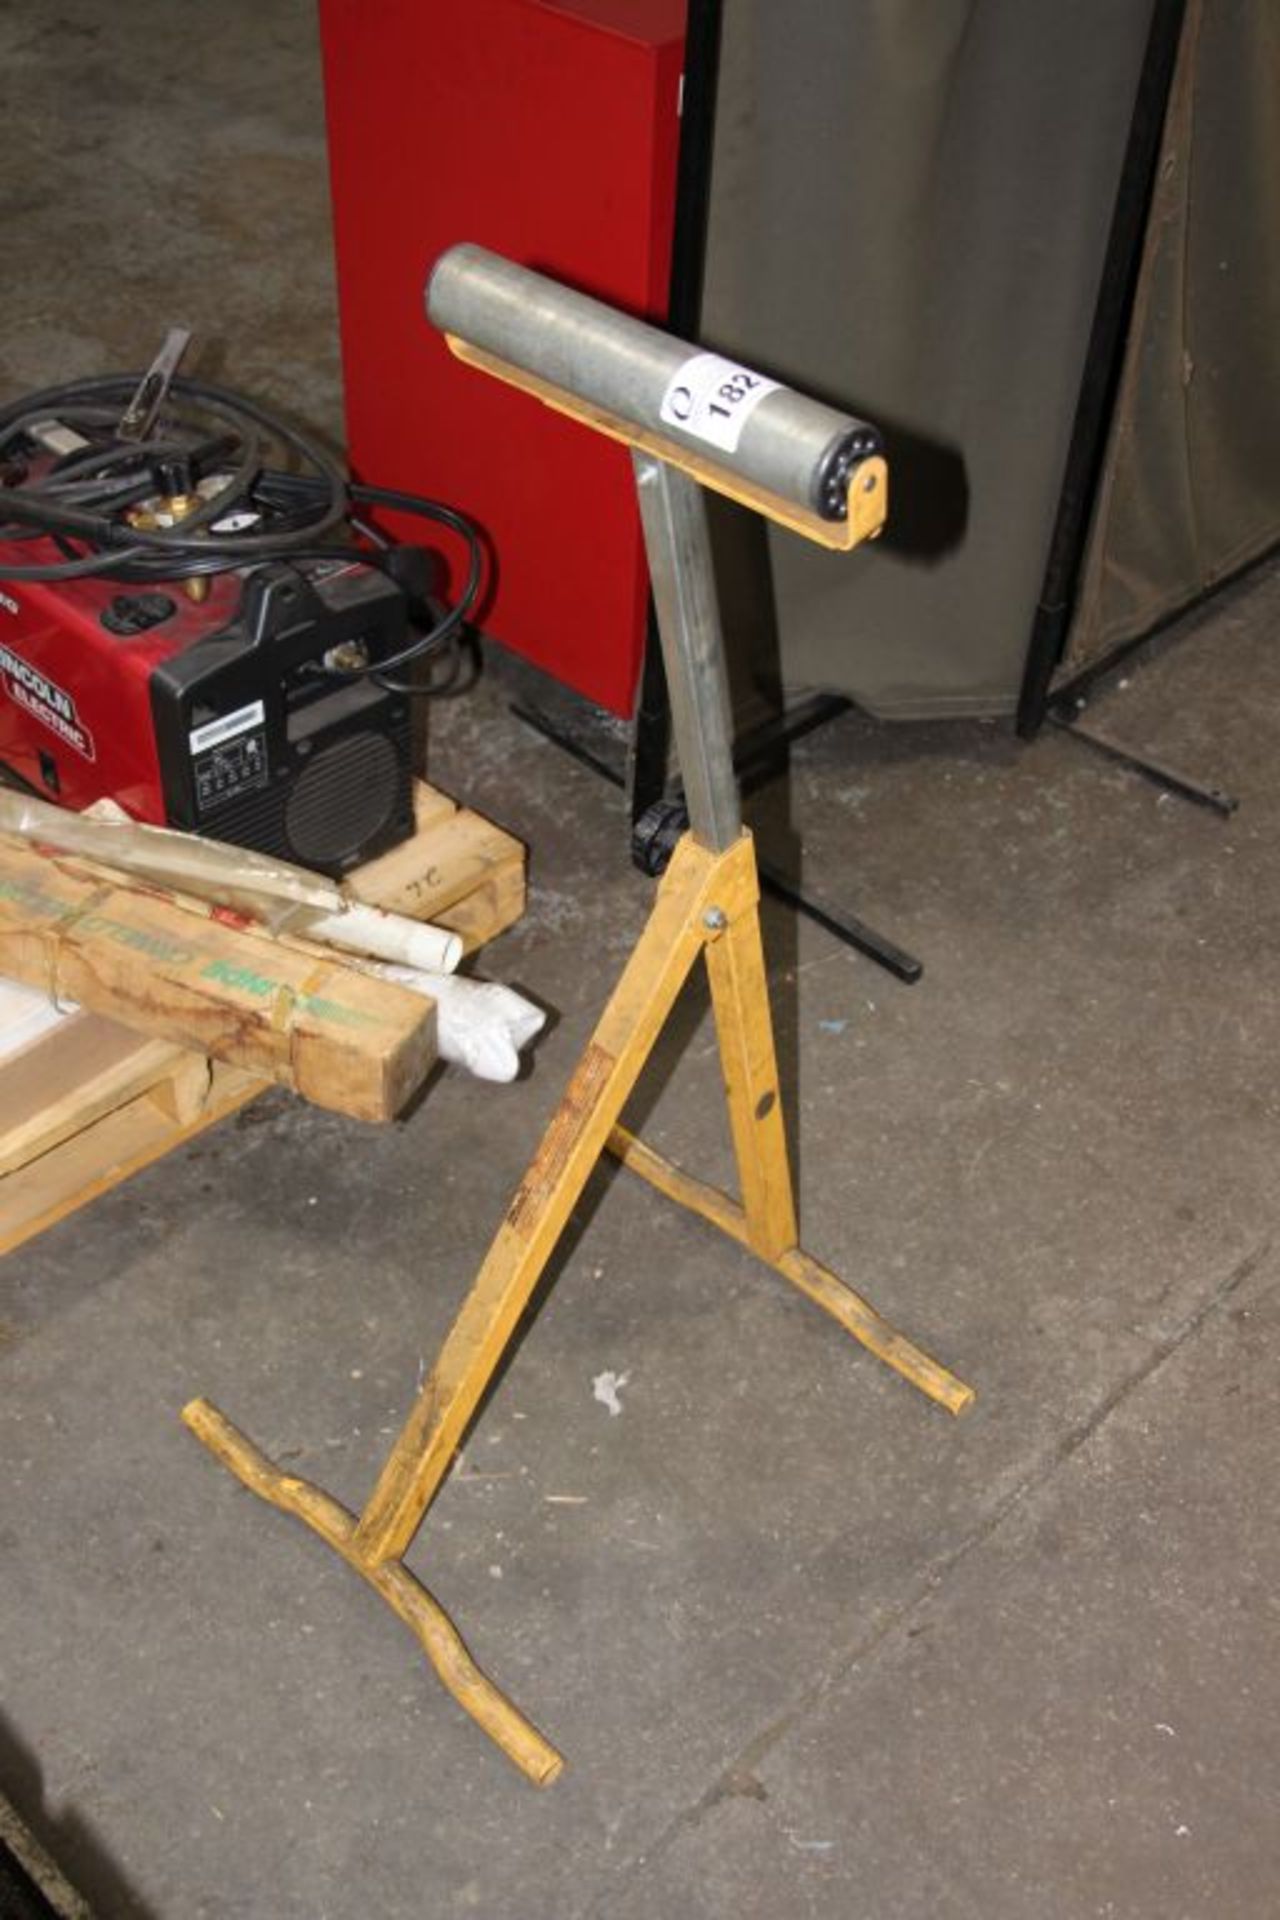 Adjustable roller stand